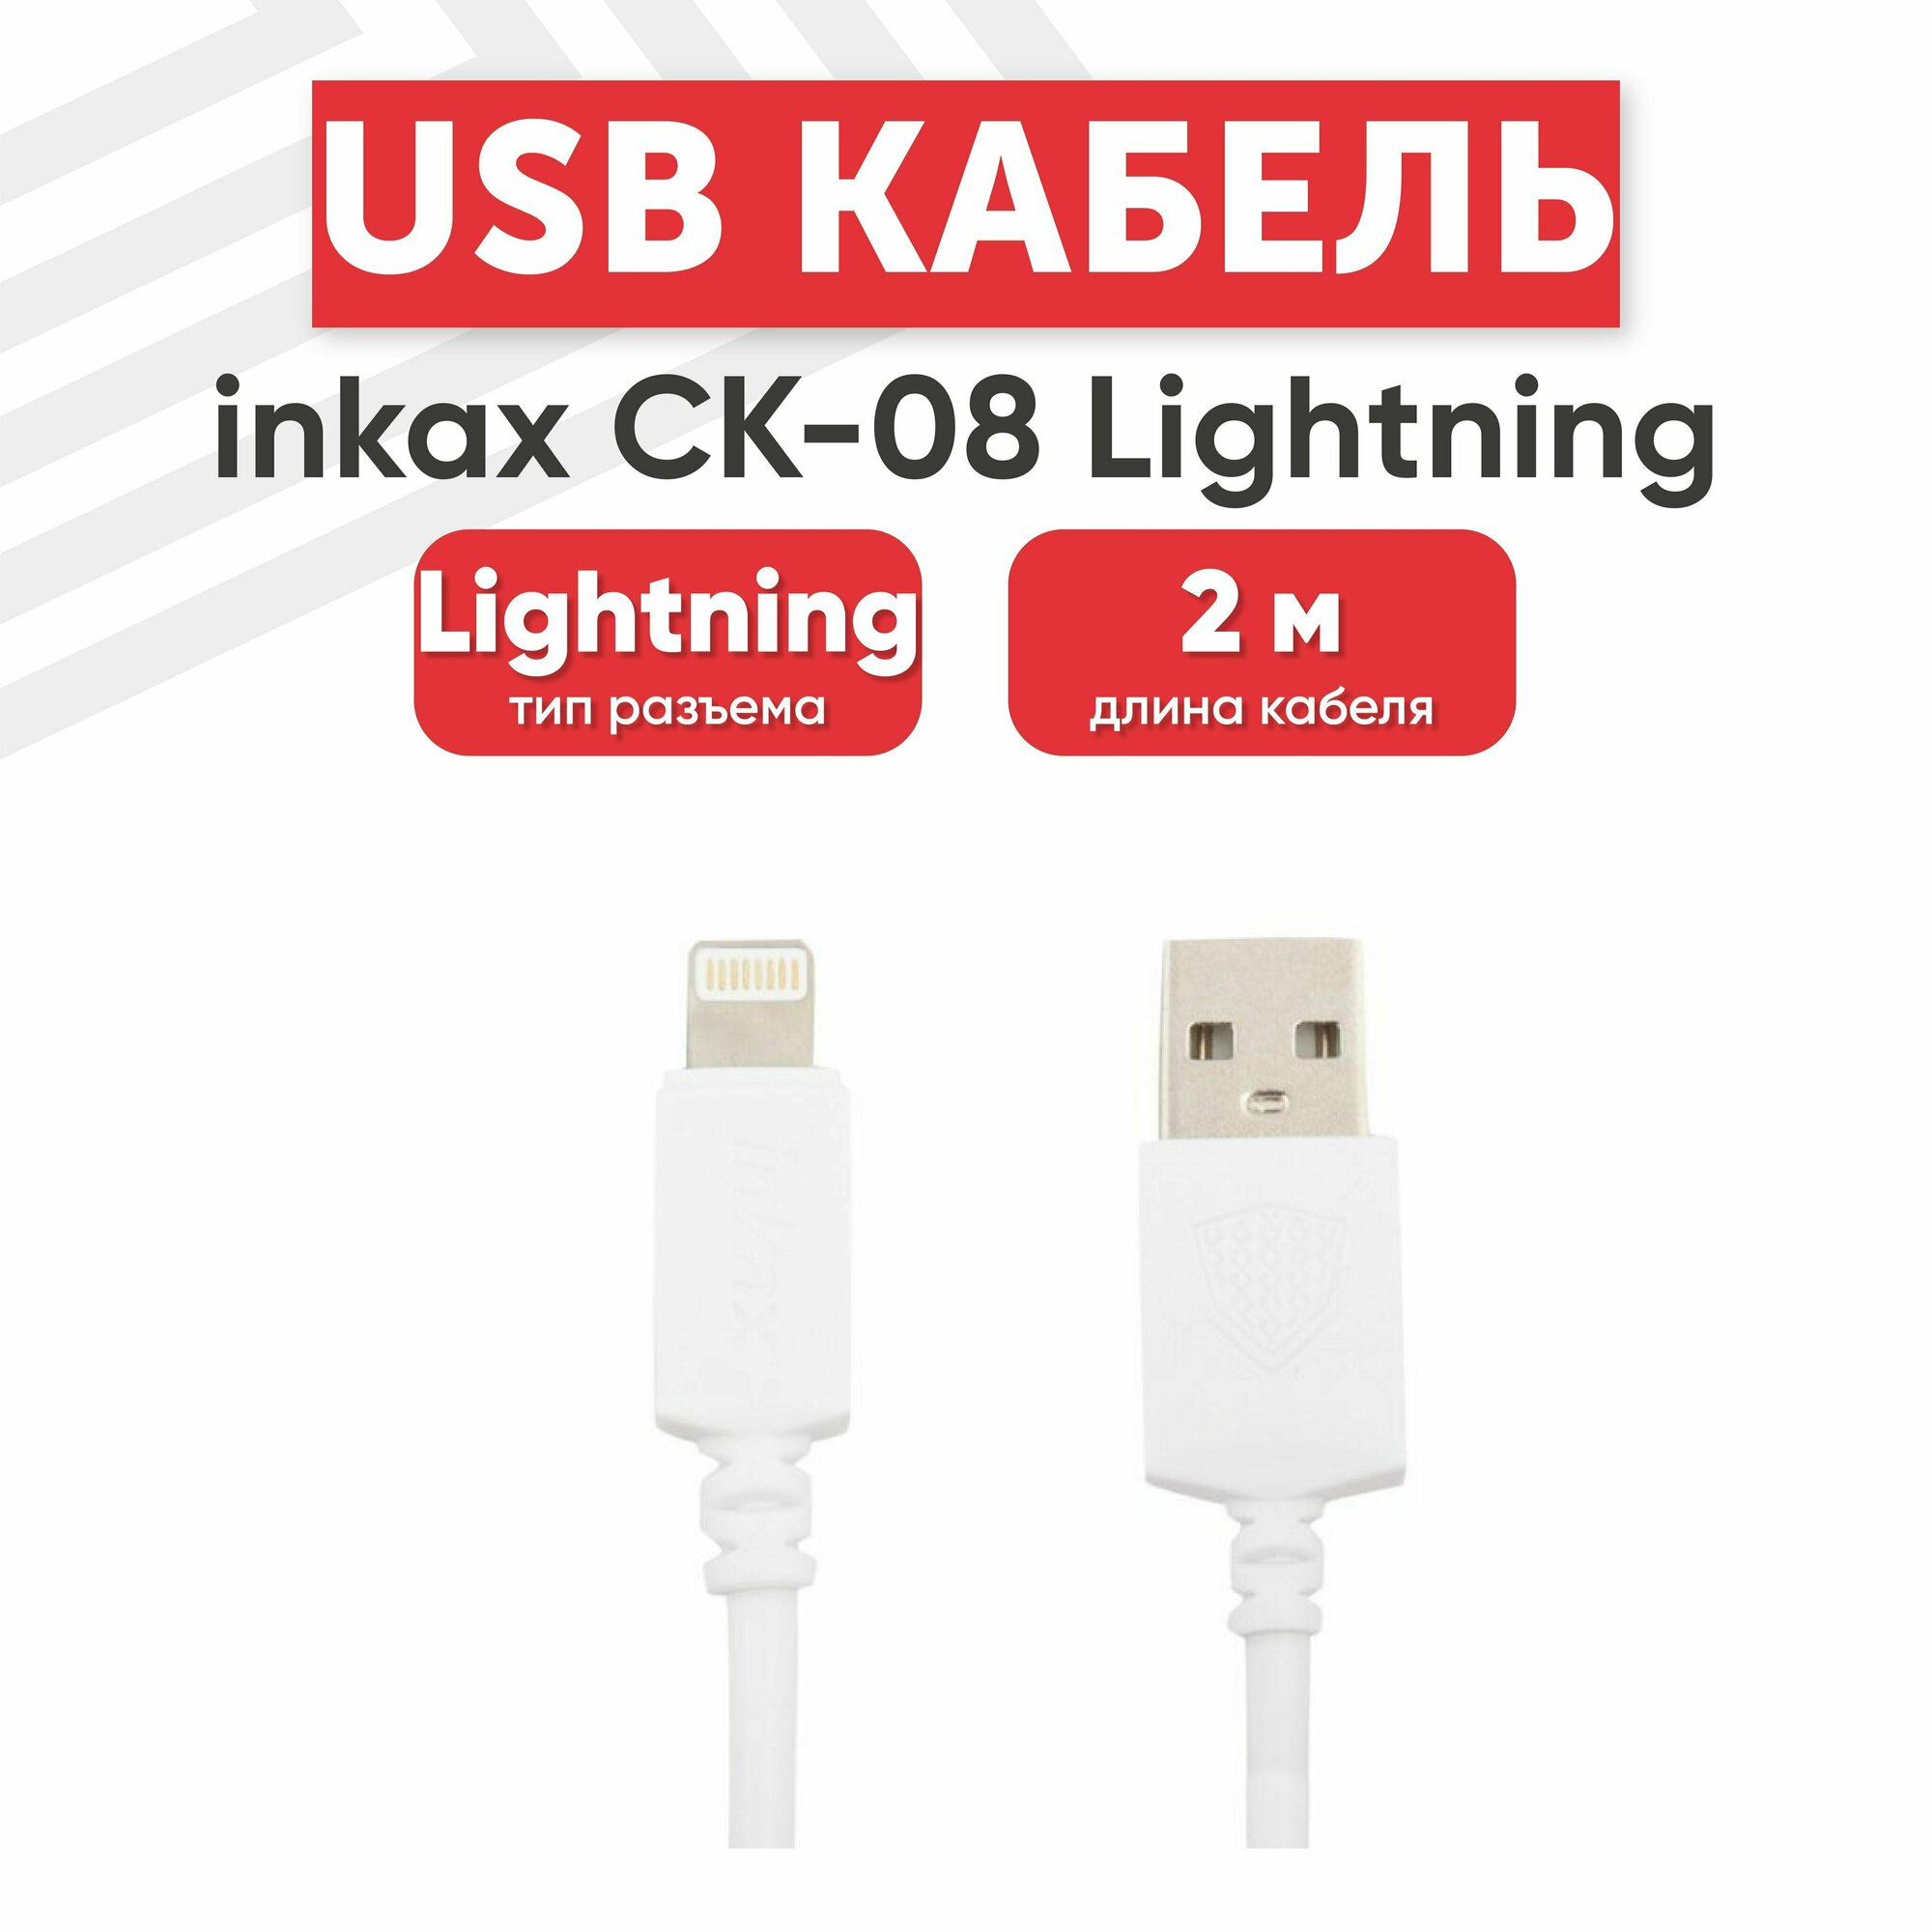 USB кабель inkax CK-08 для зарядки, передачи данных, Lightning 8-pin, 2 метра, TPE, белый